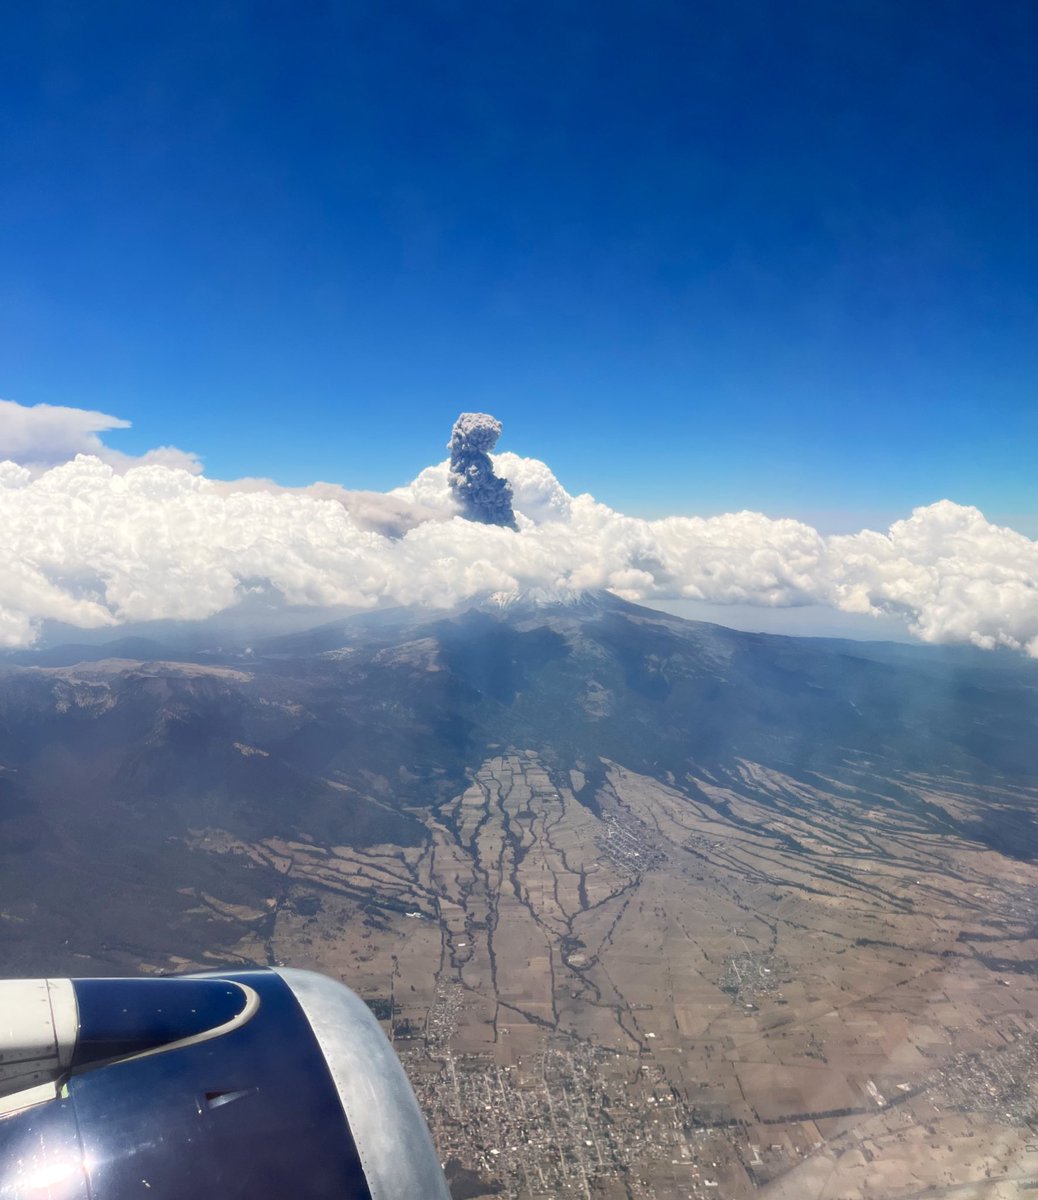 Flying over Mexico City, we saw Godzilla….
A volcano cloud

#Popocatépetl #volcan #volcano #Cloud #Godzilla #Mexico #MexicoCity